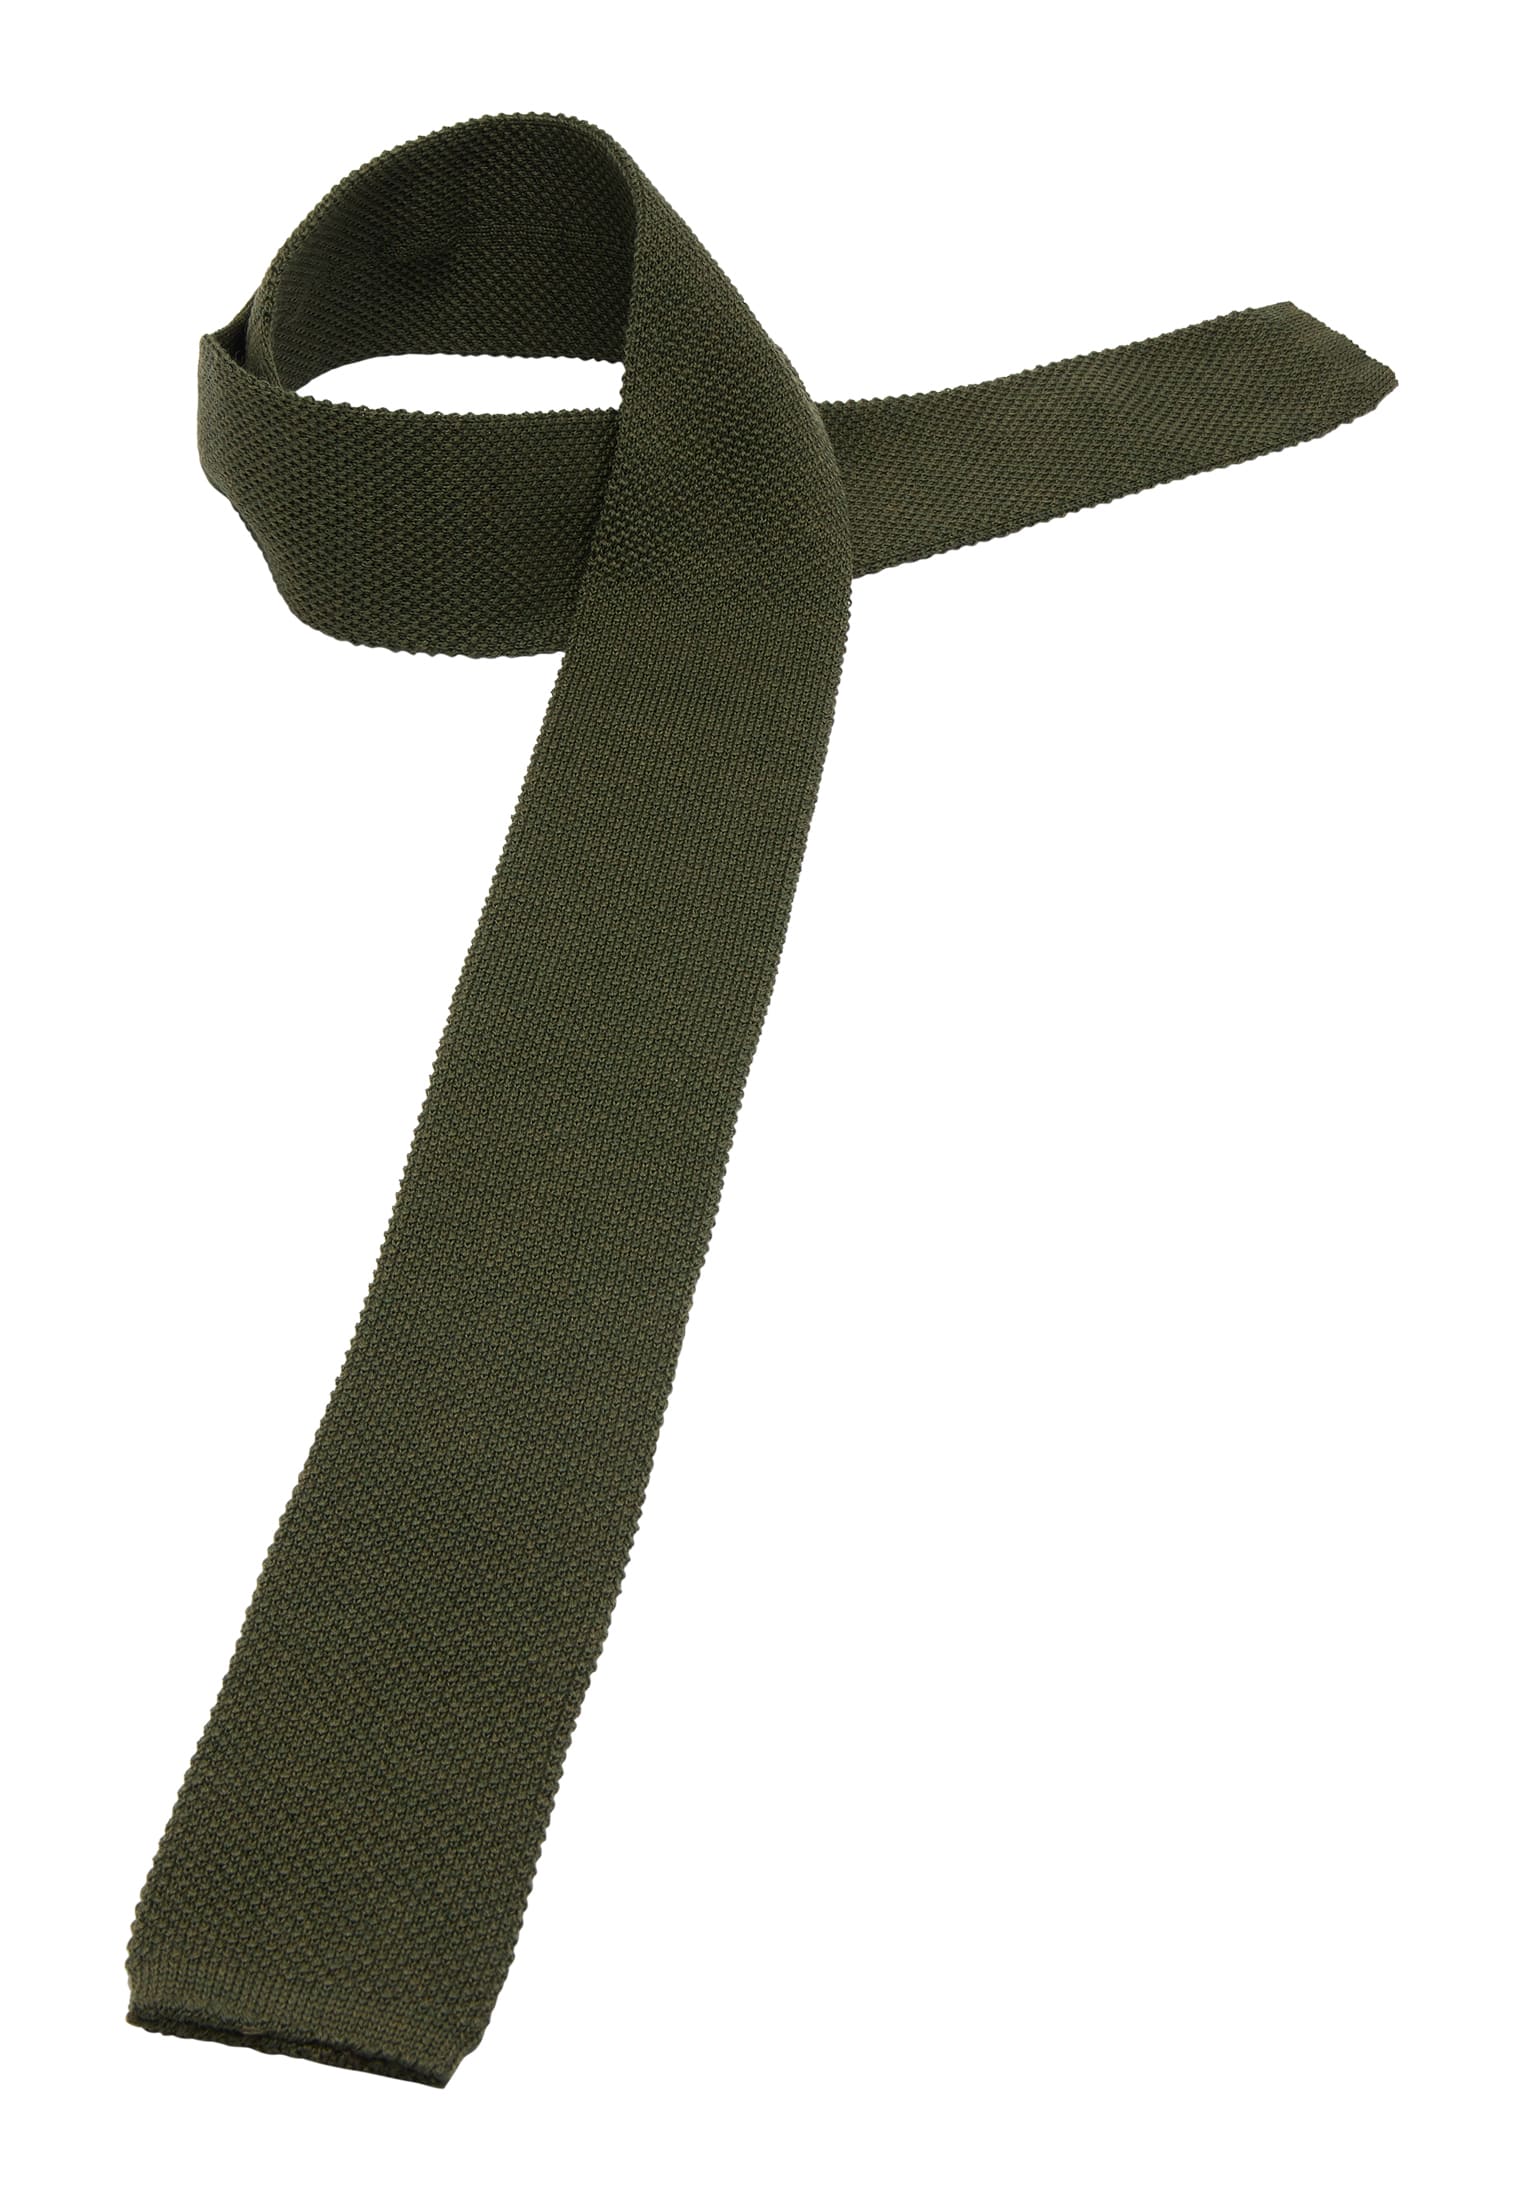 khaki in | Krawatte strukturiert khaki 1AC01880-04-52-142 | | 142